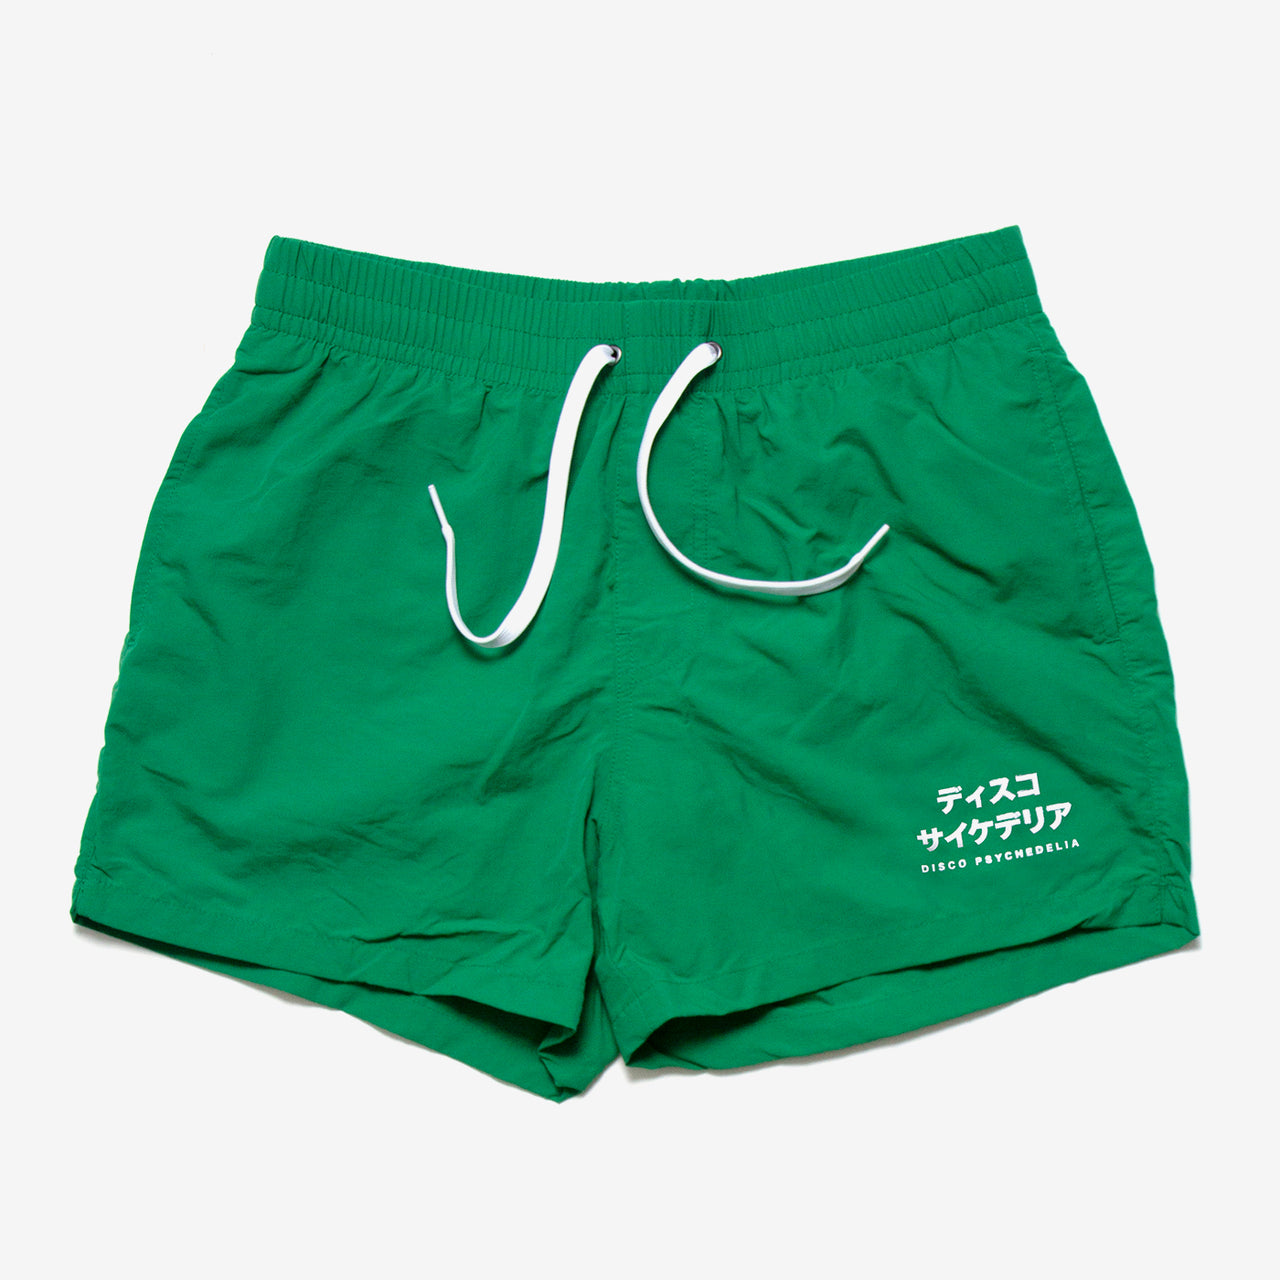 Disco Psychedelia - Swim Shorts - Green